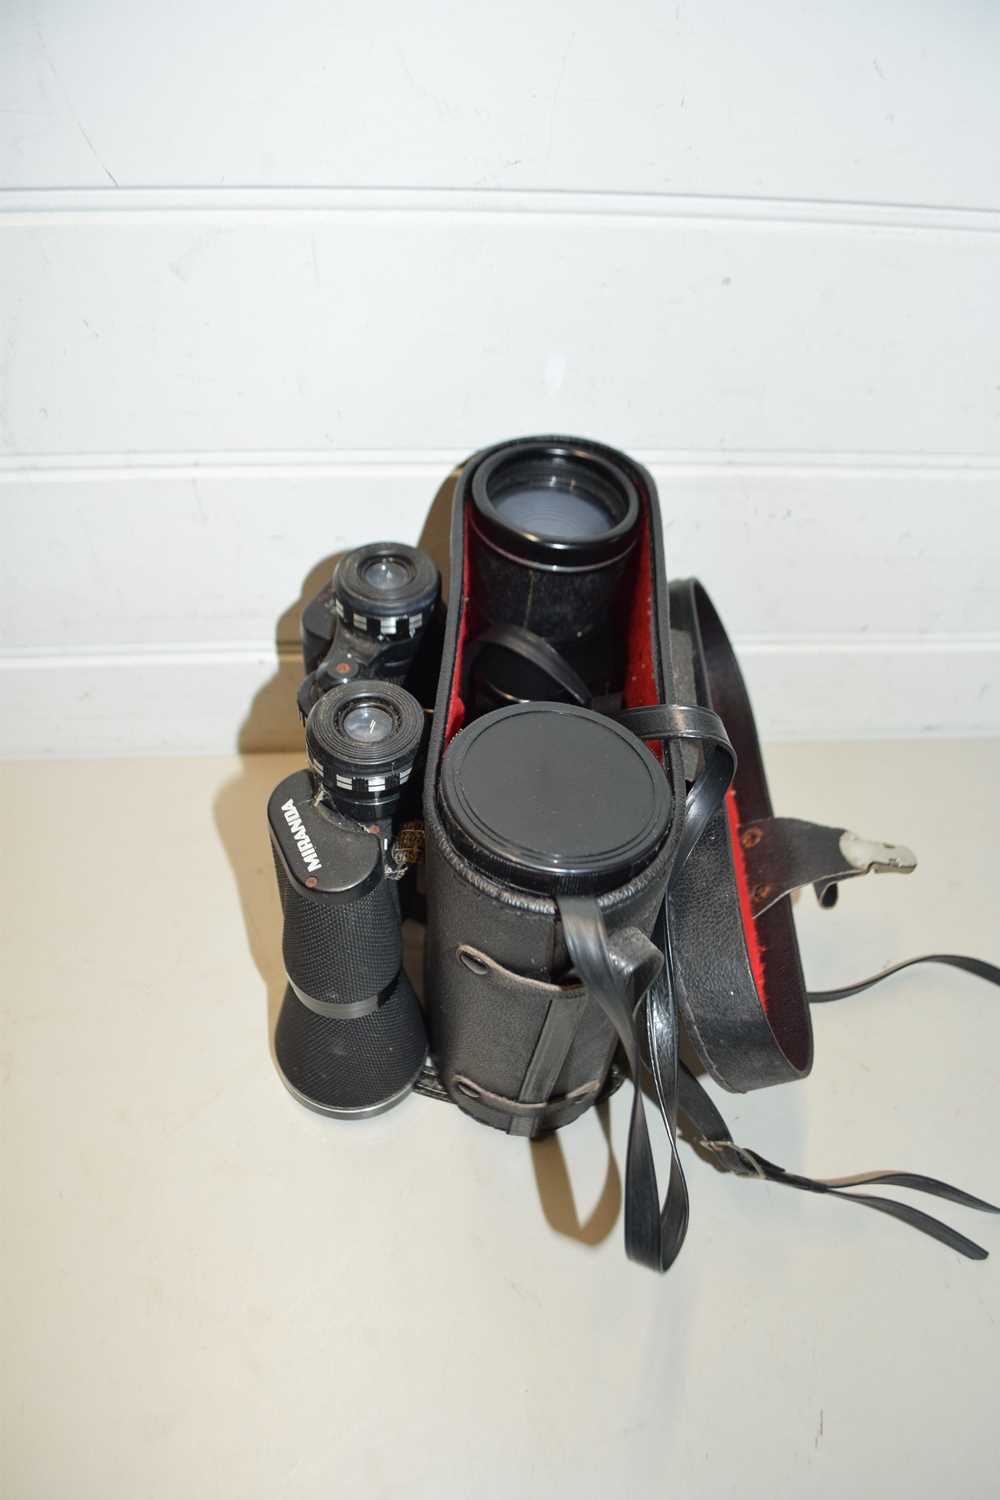 Pair of vintage Miranda 16x50 binoculars and a pair of Korean Polar binoculars 10x50